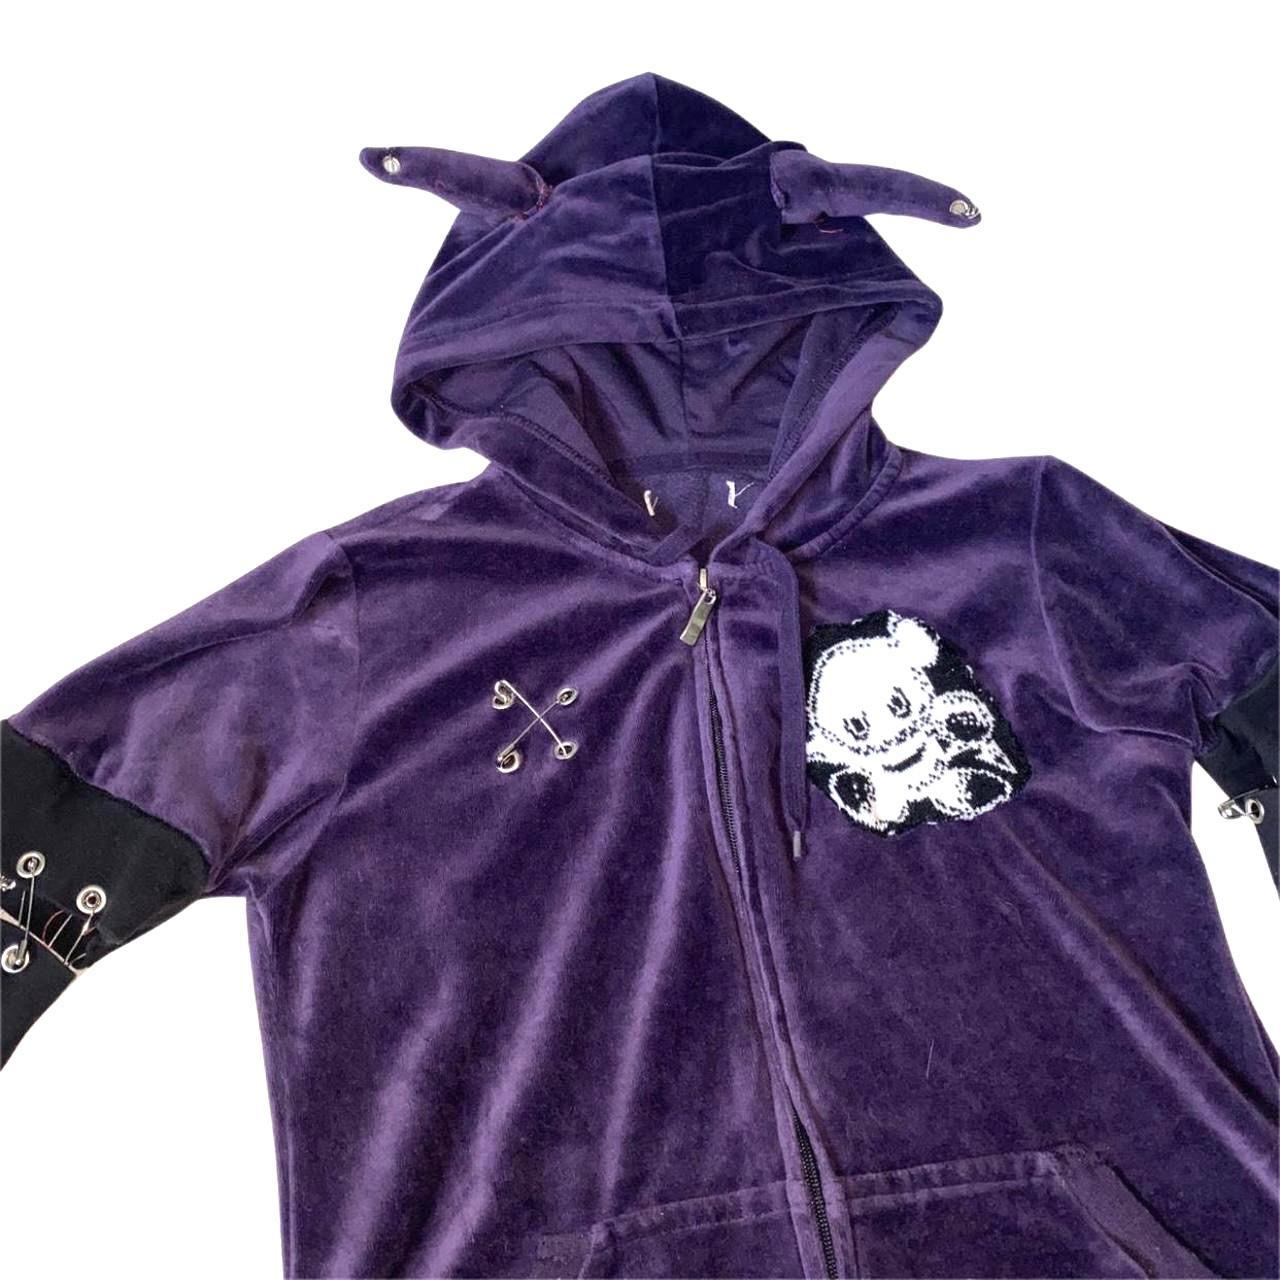 Chaos Women's Purple and Black Coat (2)